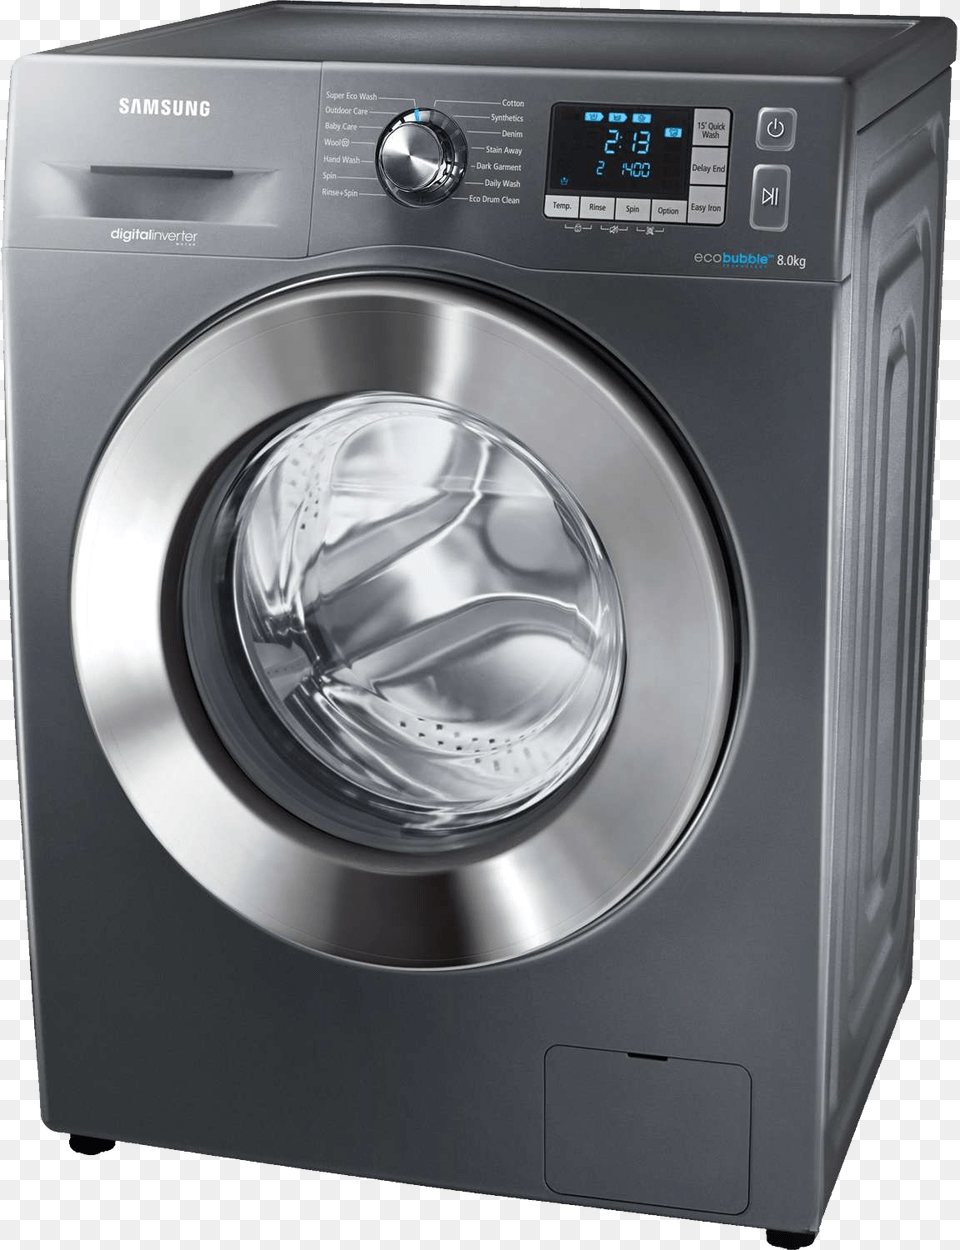 Washing Machine Samsung Ecobubble Wf90f5e5u4x Washing Machine Graphite, Appliance, Device, Electrical Device, Washer Png Image